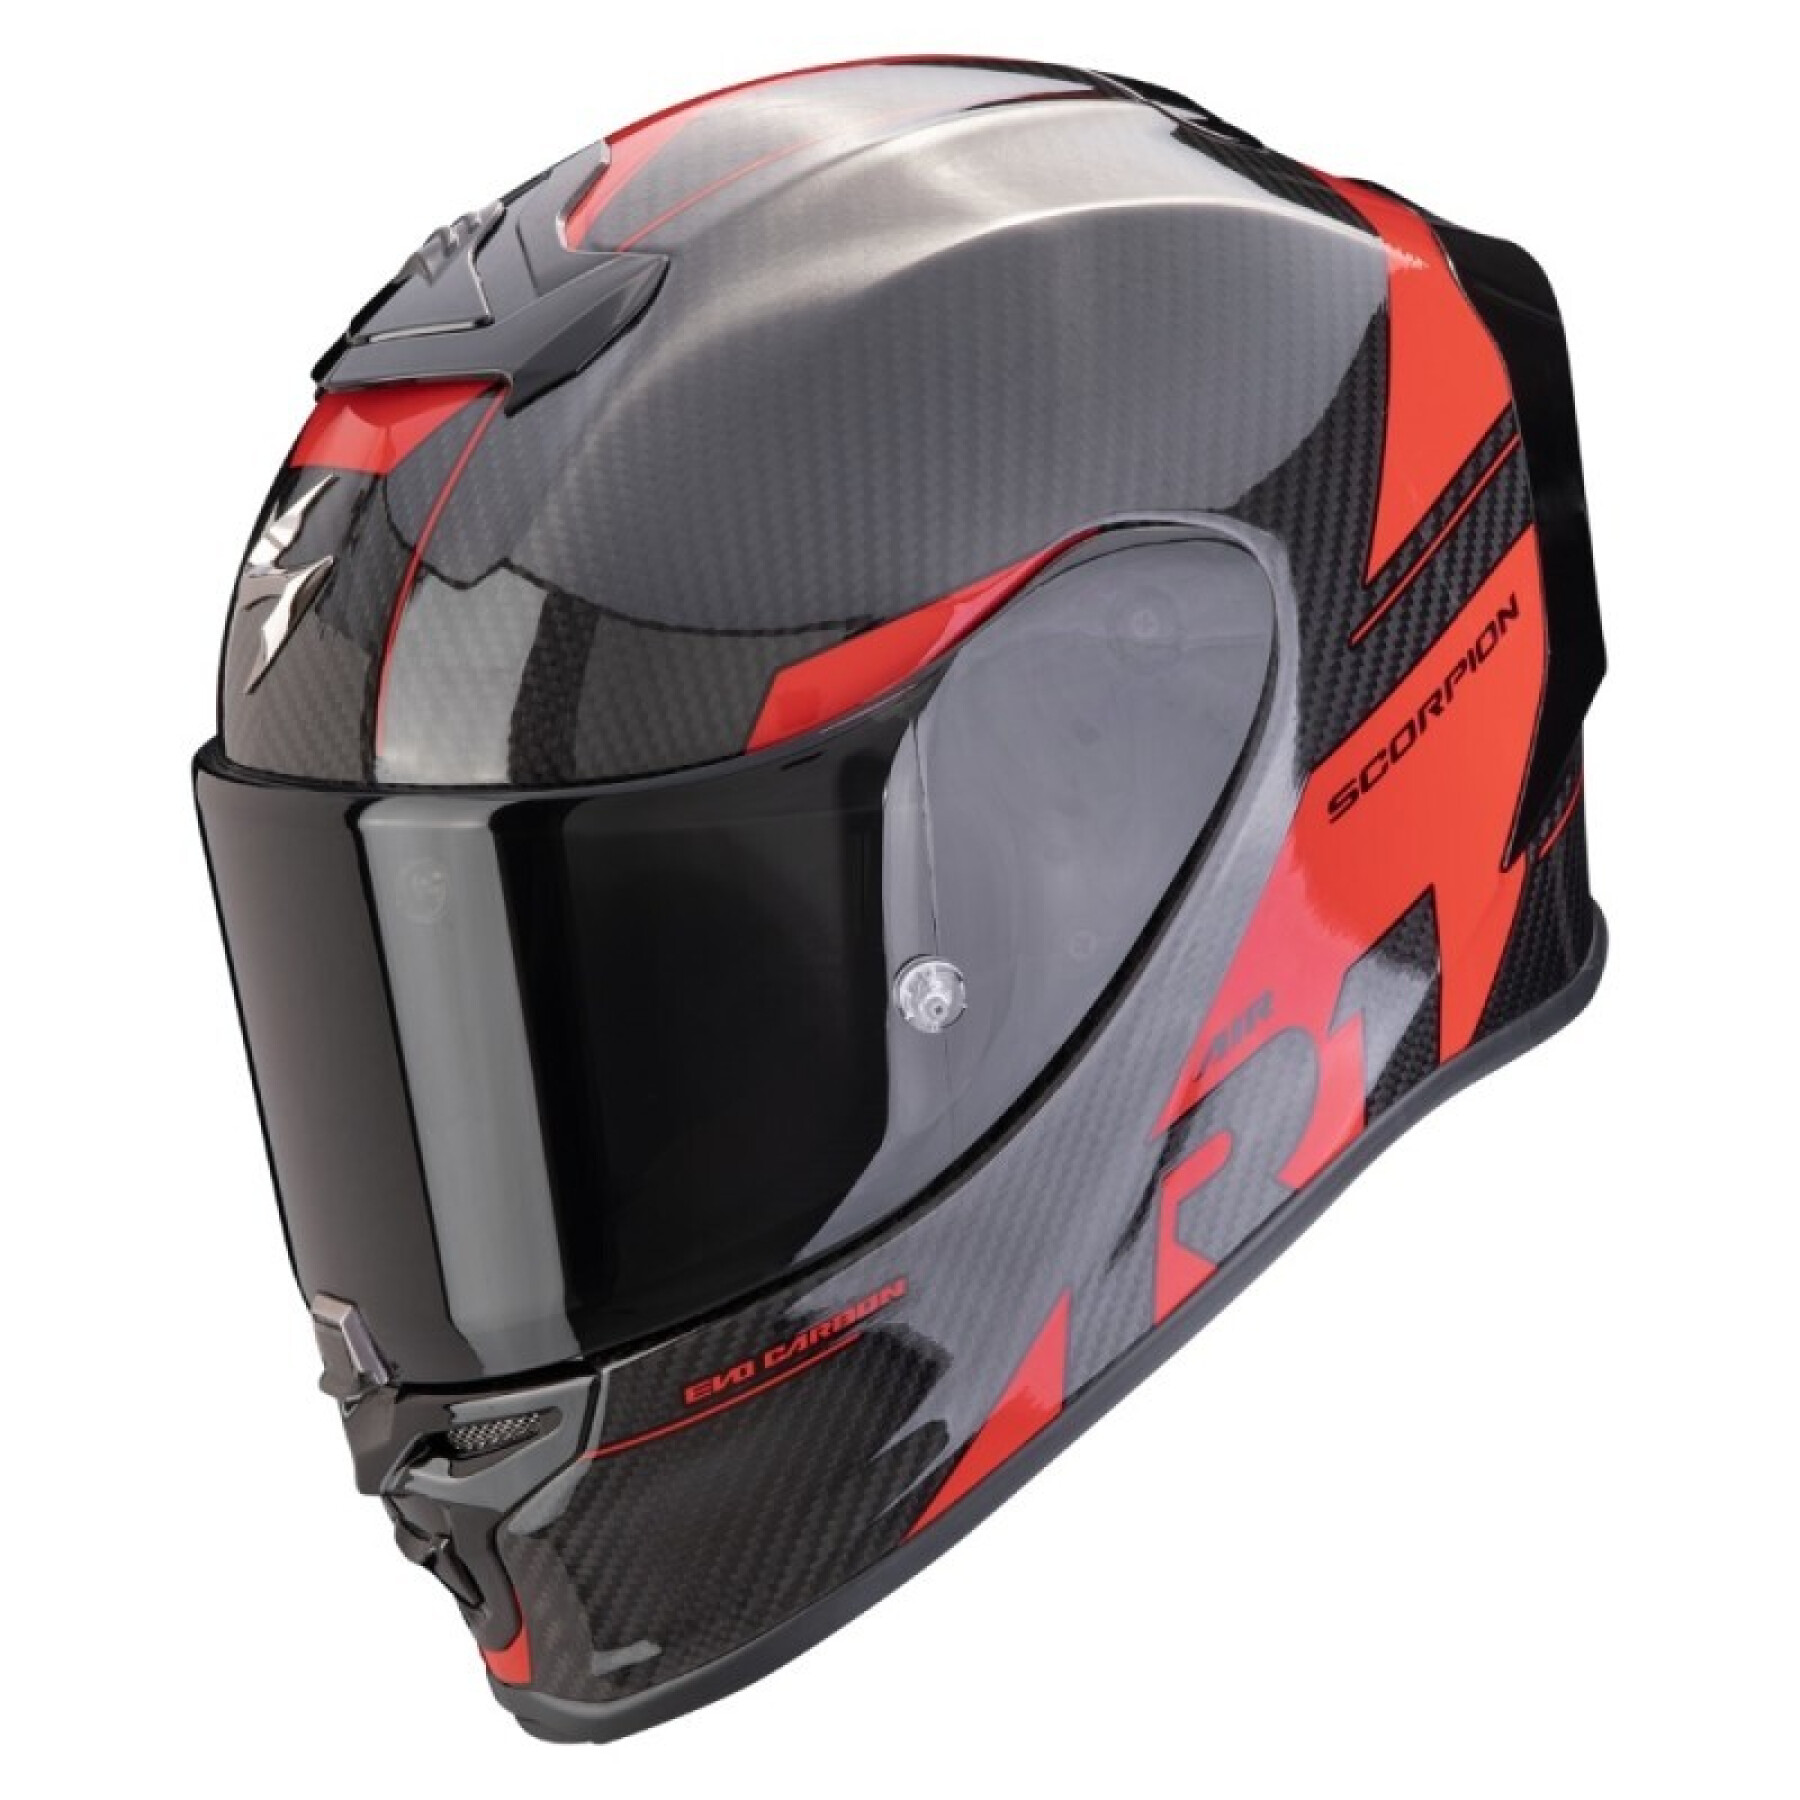 Full face motorcycle helmet Scorpion Exo-R1 Evo Carbon Air Rally